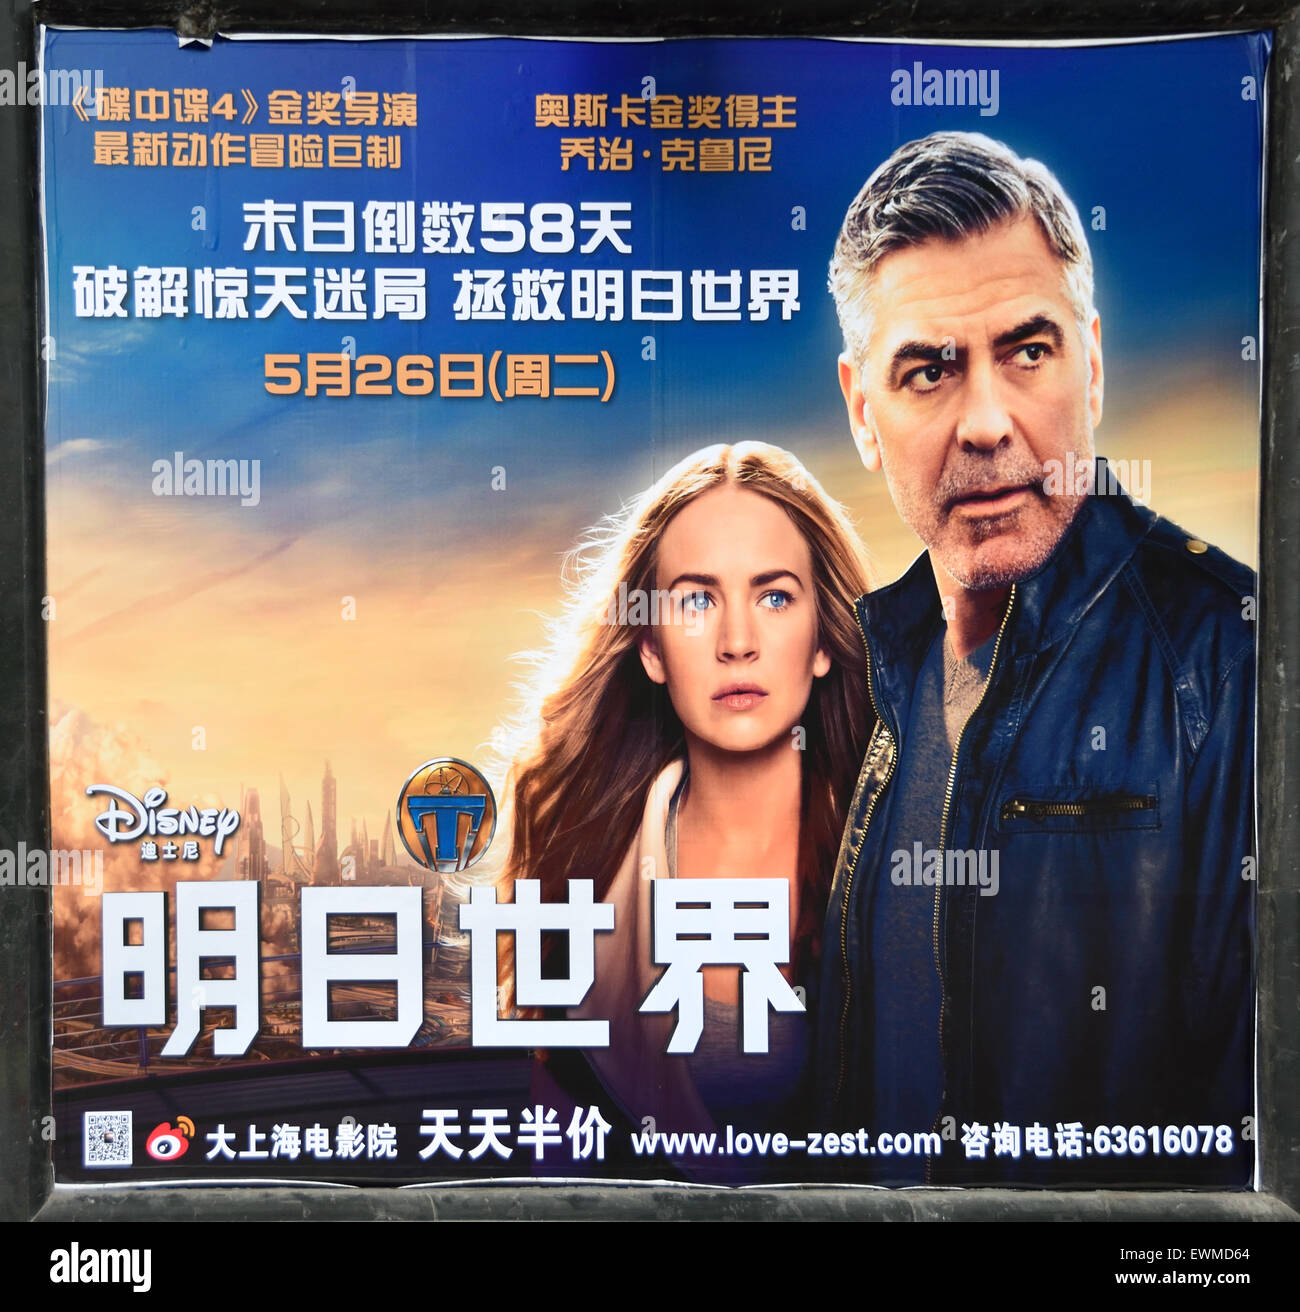 George Clooney, estrella de cine cartelera Nanjing Road Plaza del Pueblo de Shanghai, China Foto de stock